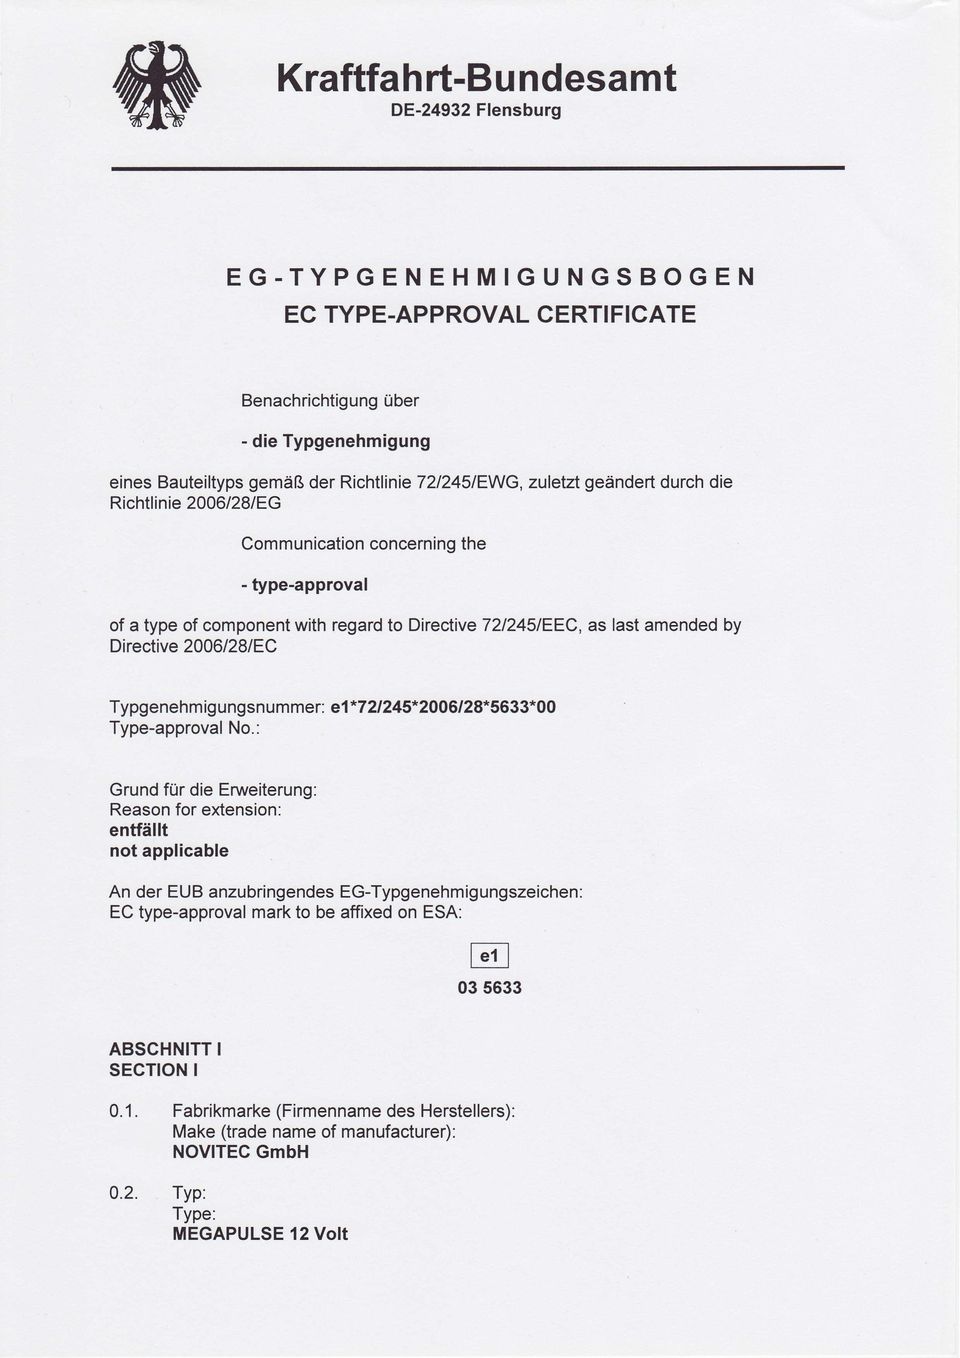 Typgenehmigungsnum mer: e1*7 21245*2006128*5633*00 Type-approval No.